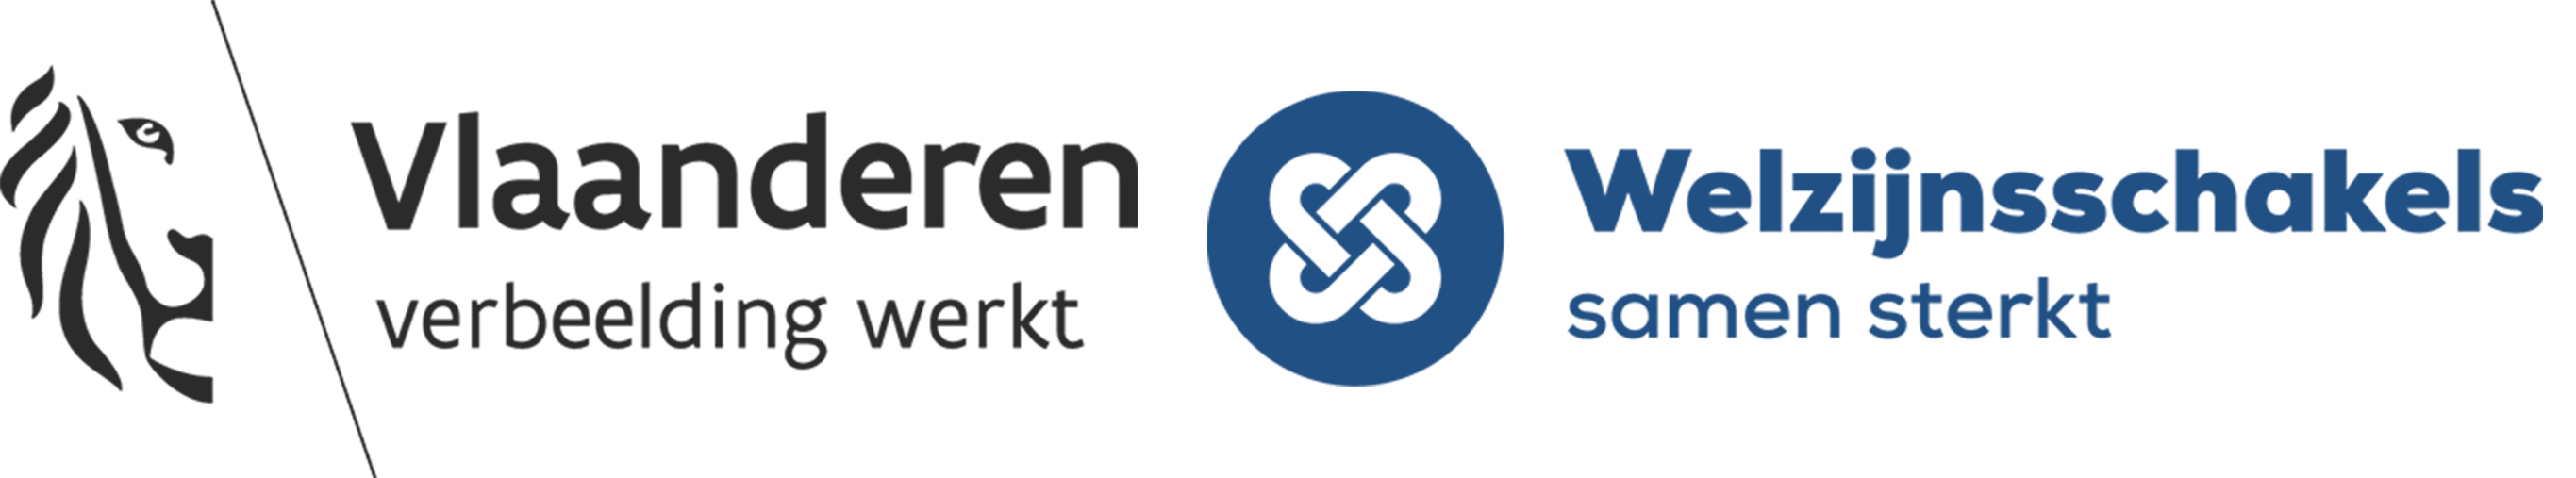 logo's_partners